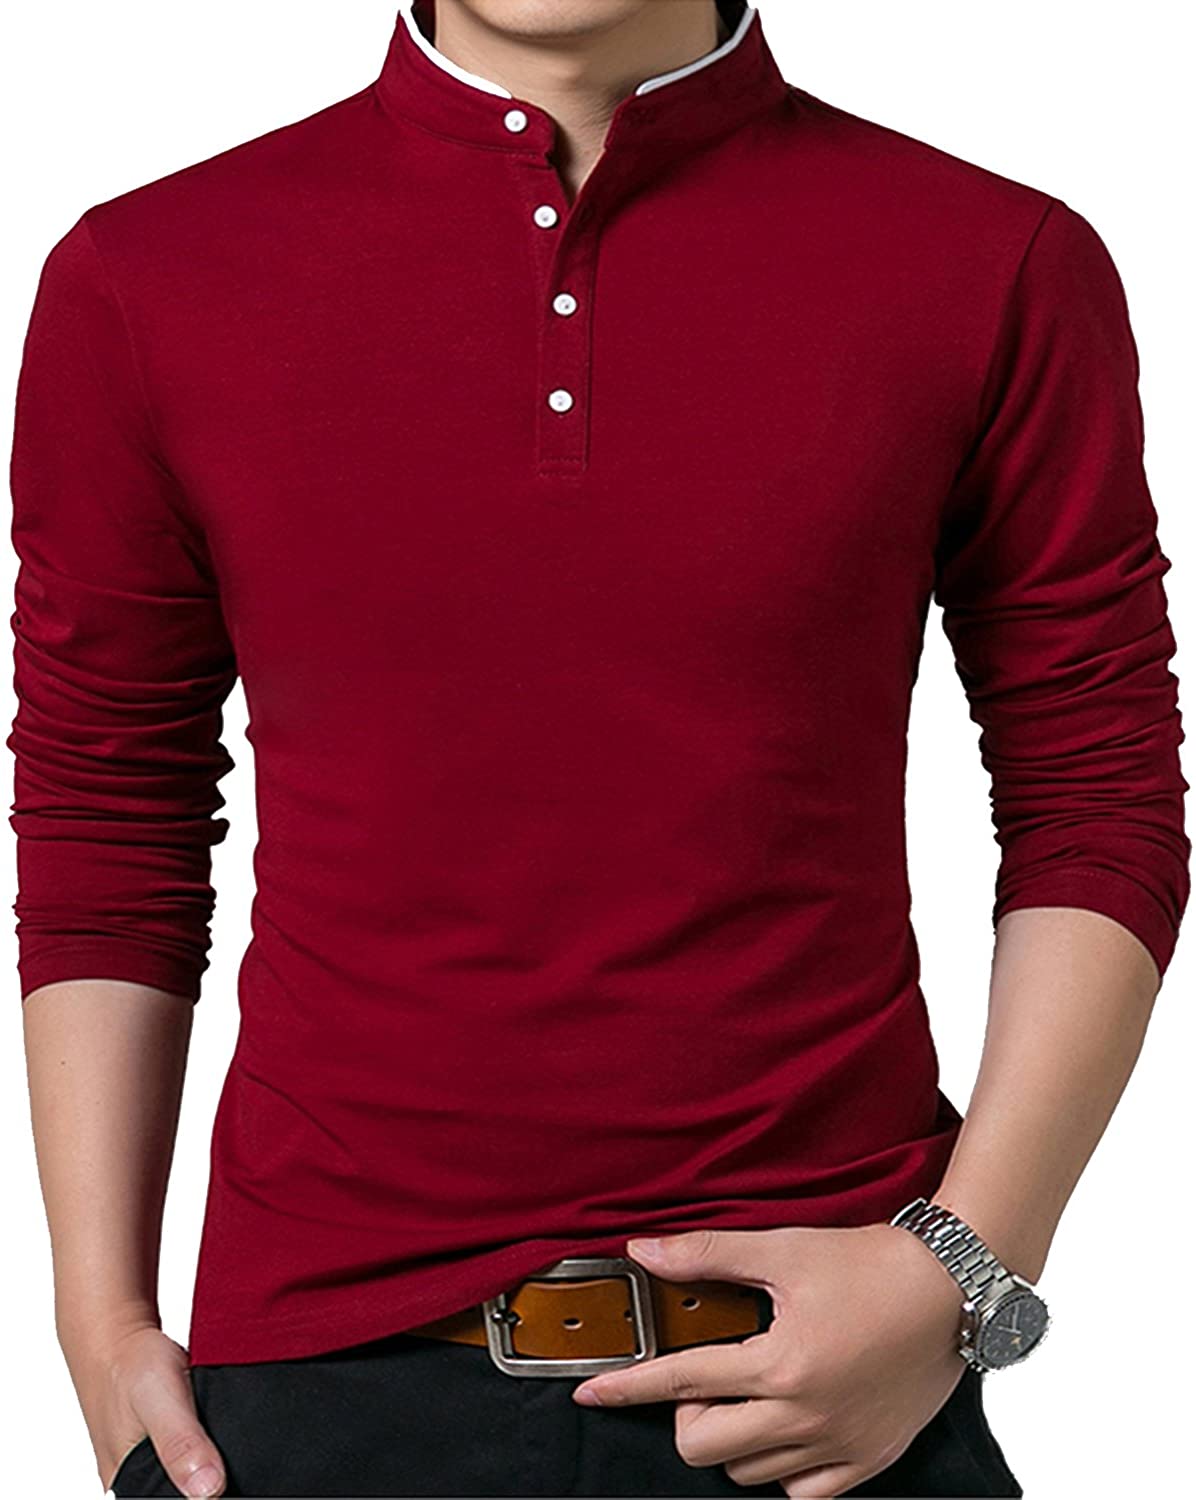 KUYIGO Men's Casual Slim Fit Long Sleeve Henley T-Shirts Cotton Shirts 